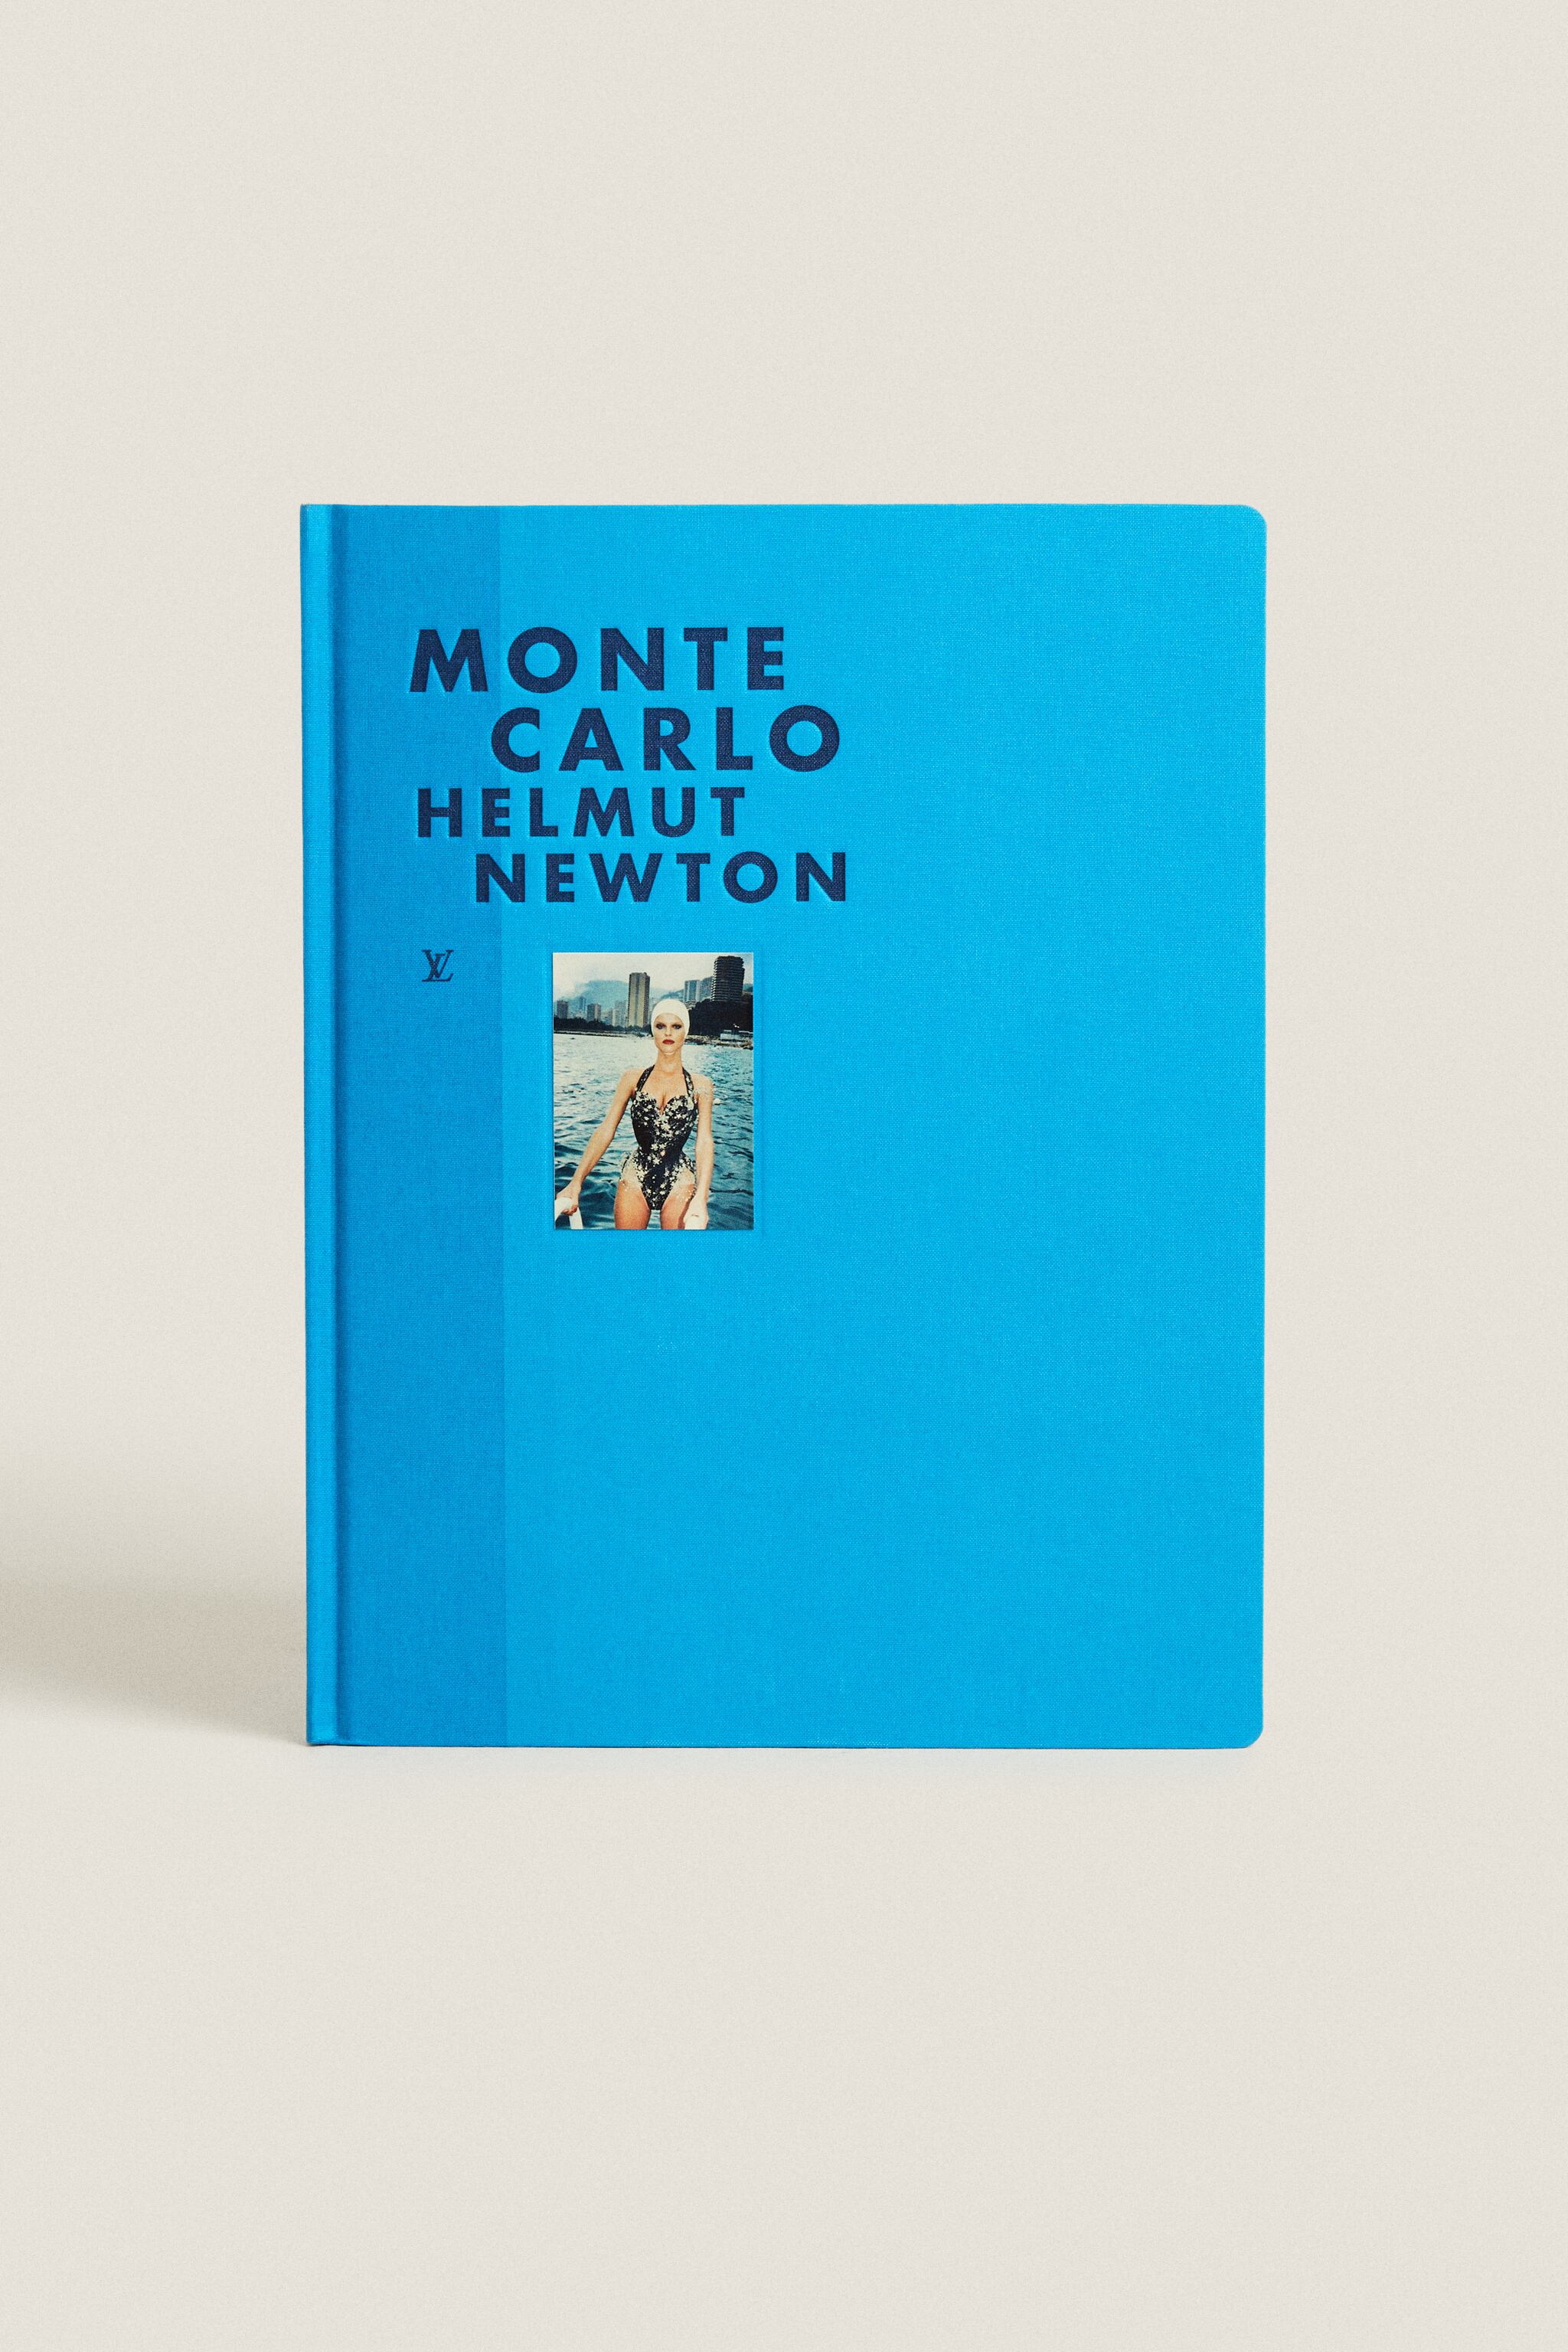 MONTE CARLO: HELMUT NEWTON